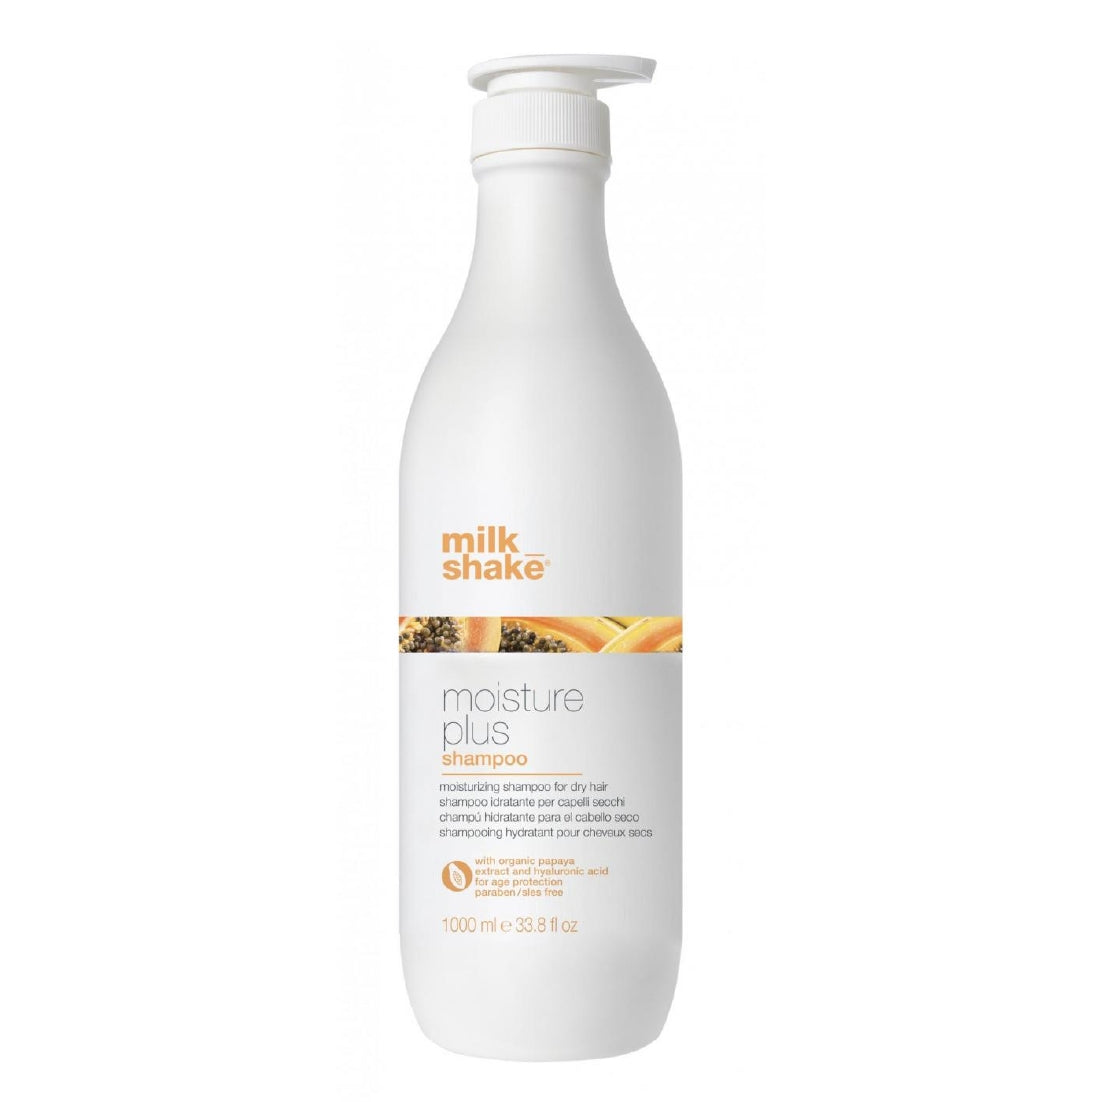 Mose triathlete navn Milk_Shake Moisture Plus Shampoo - SamaBeautyProducts